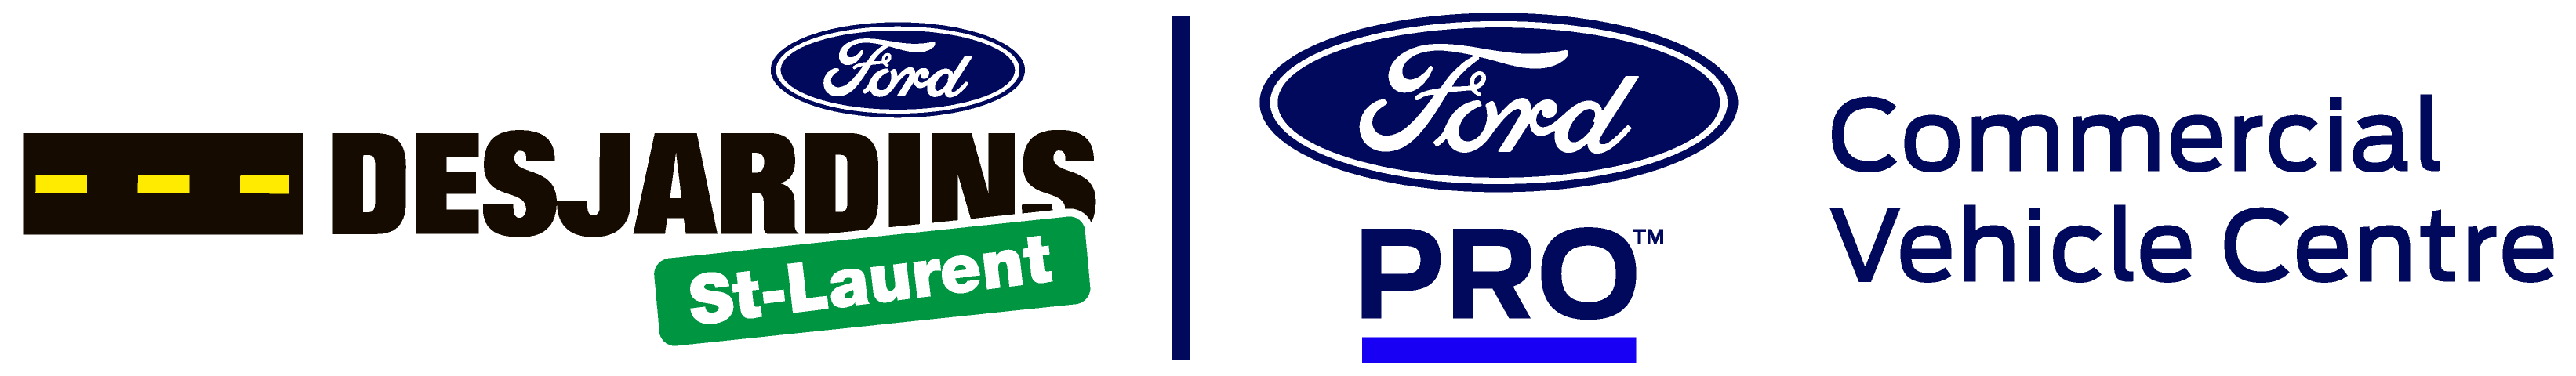 Desjardins Ford - Division Commerciale